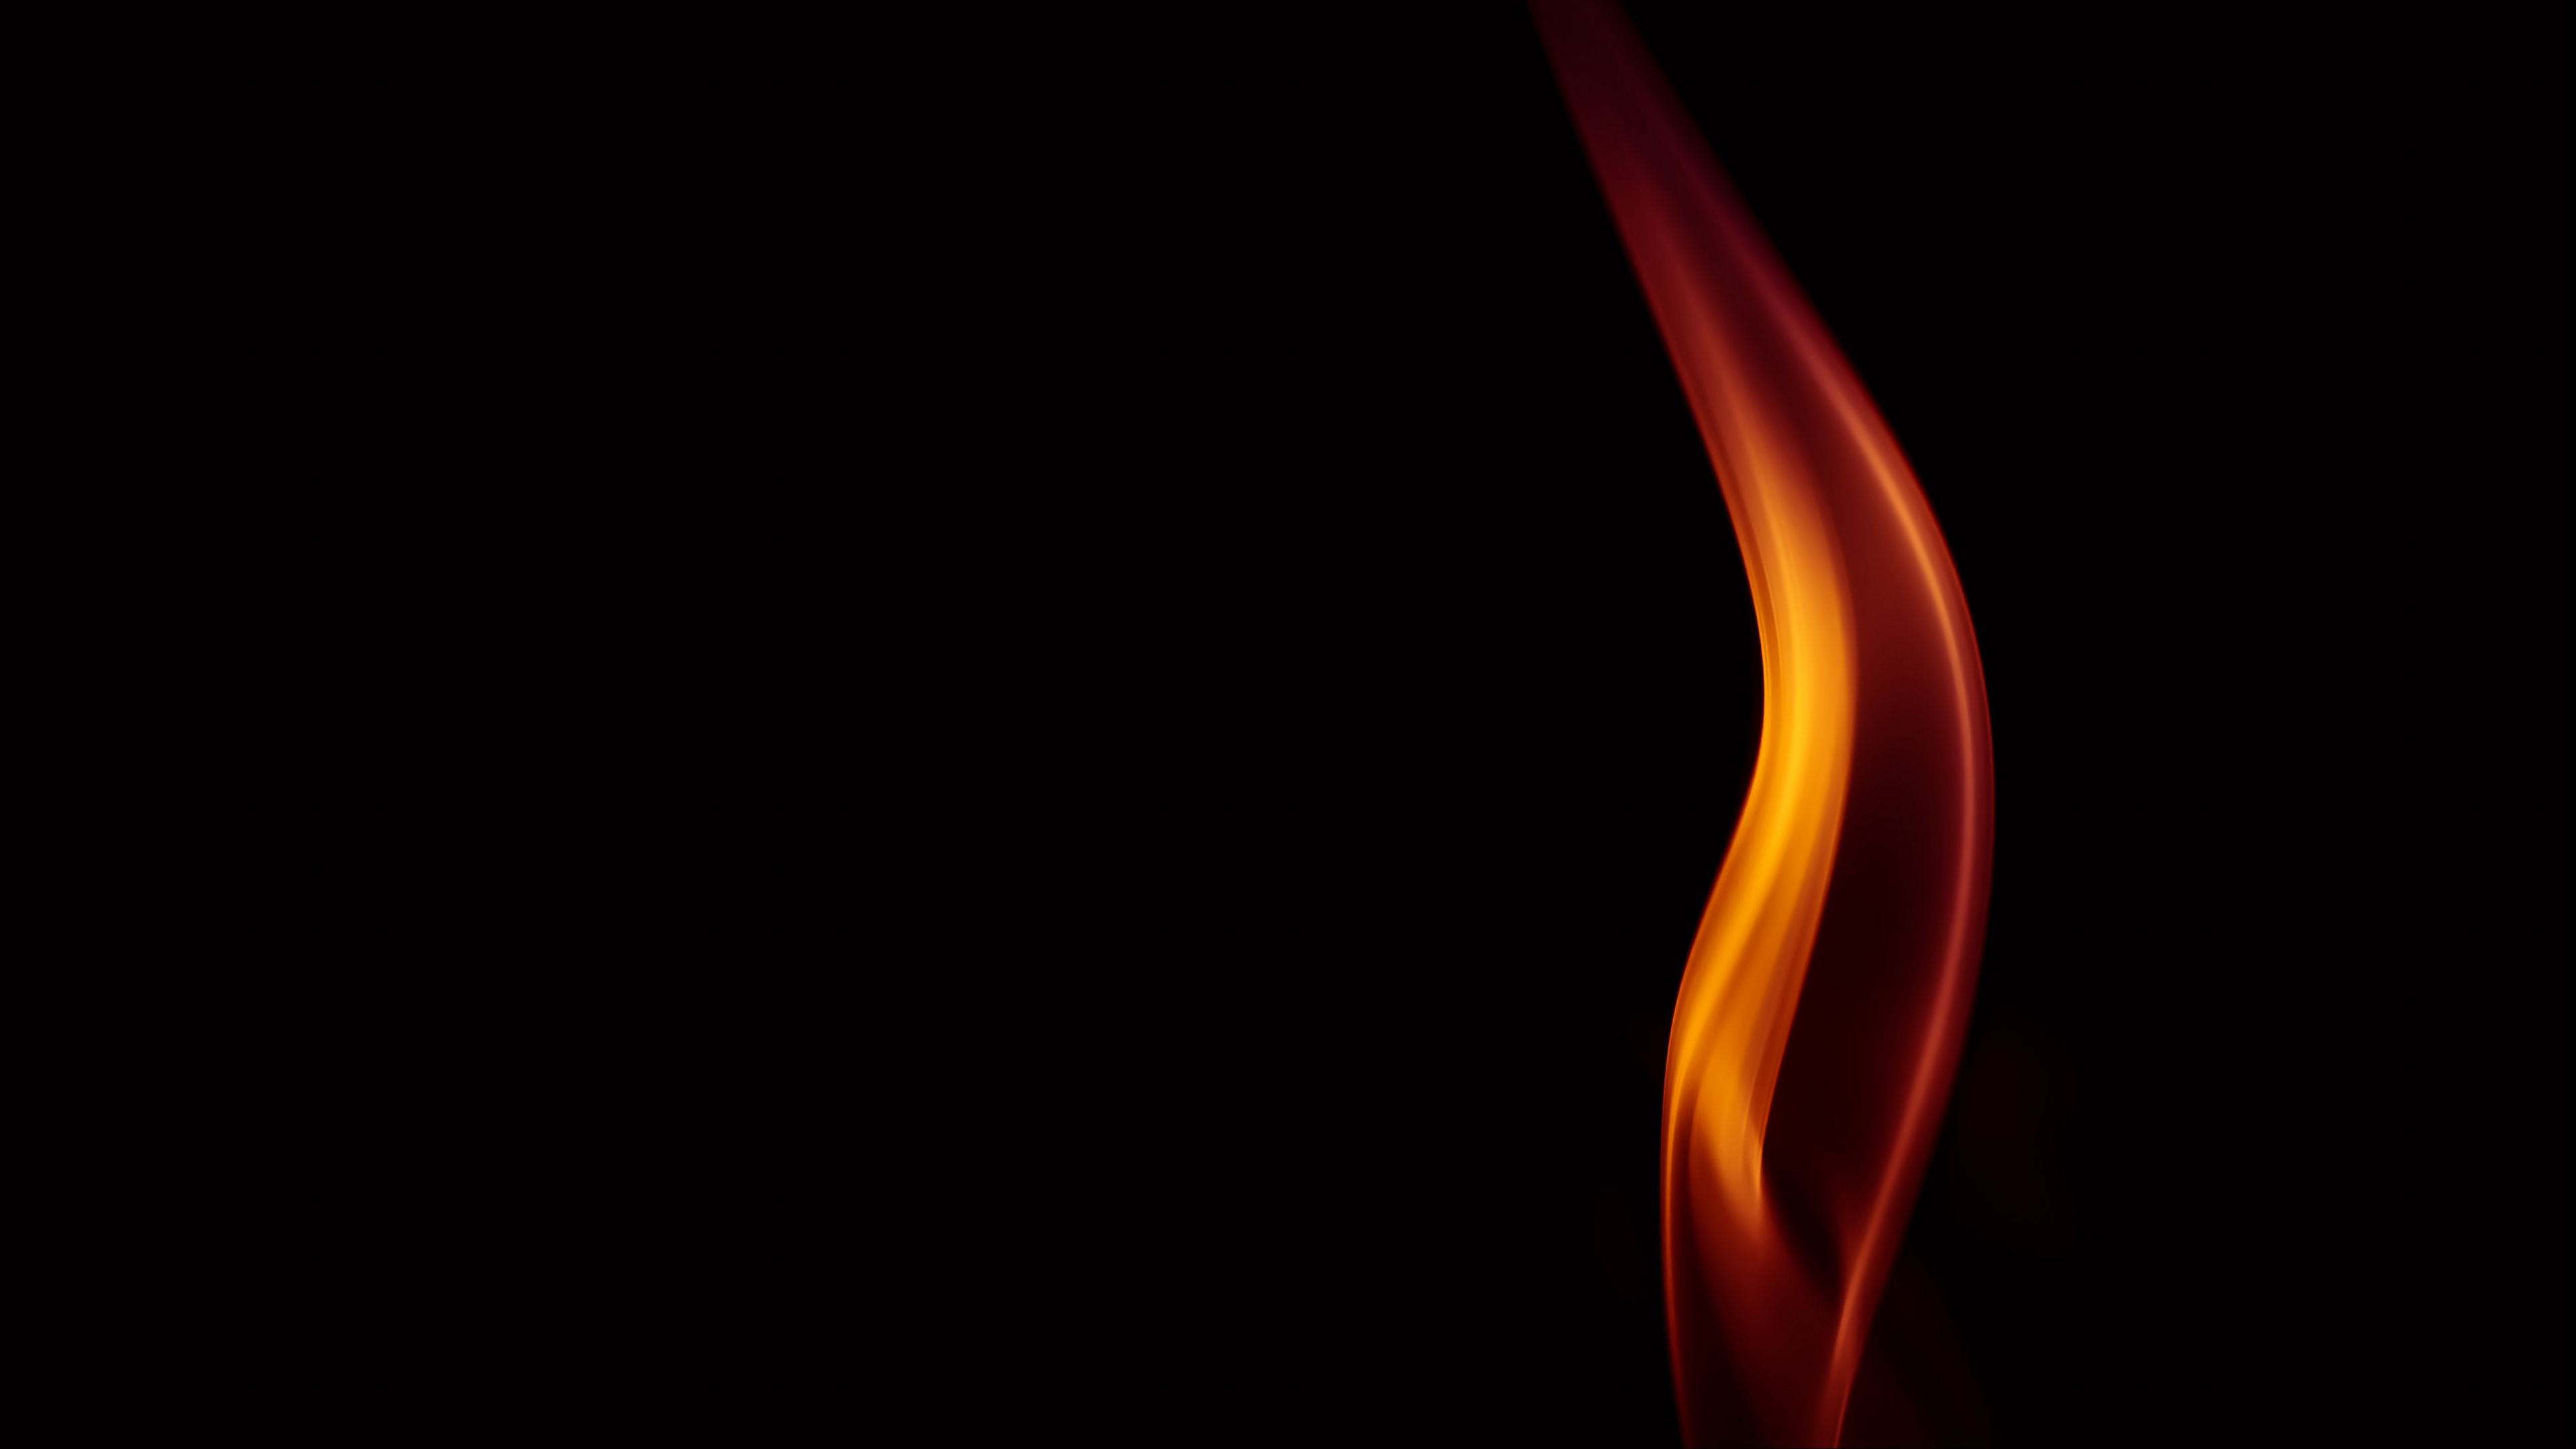 Download wallpaper 3840x2160 fire, flame, dark, black 4k uhd 16:9 hd  background